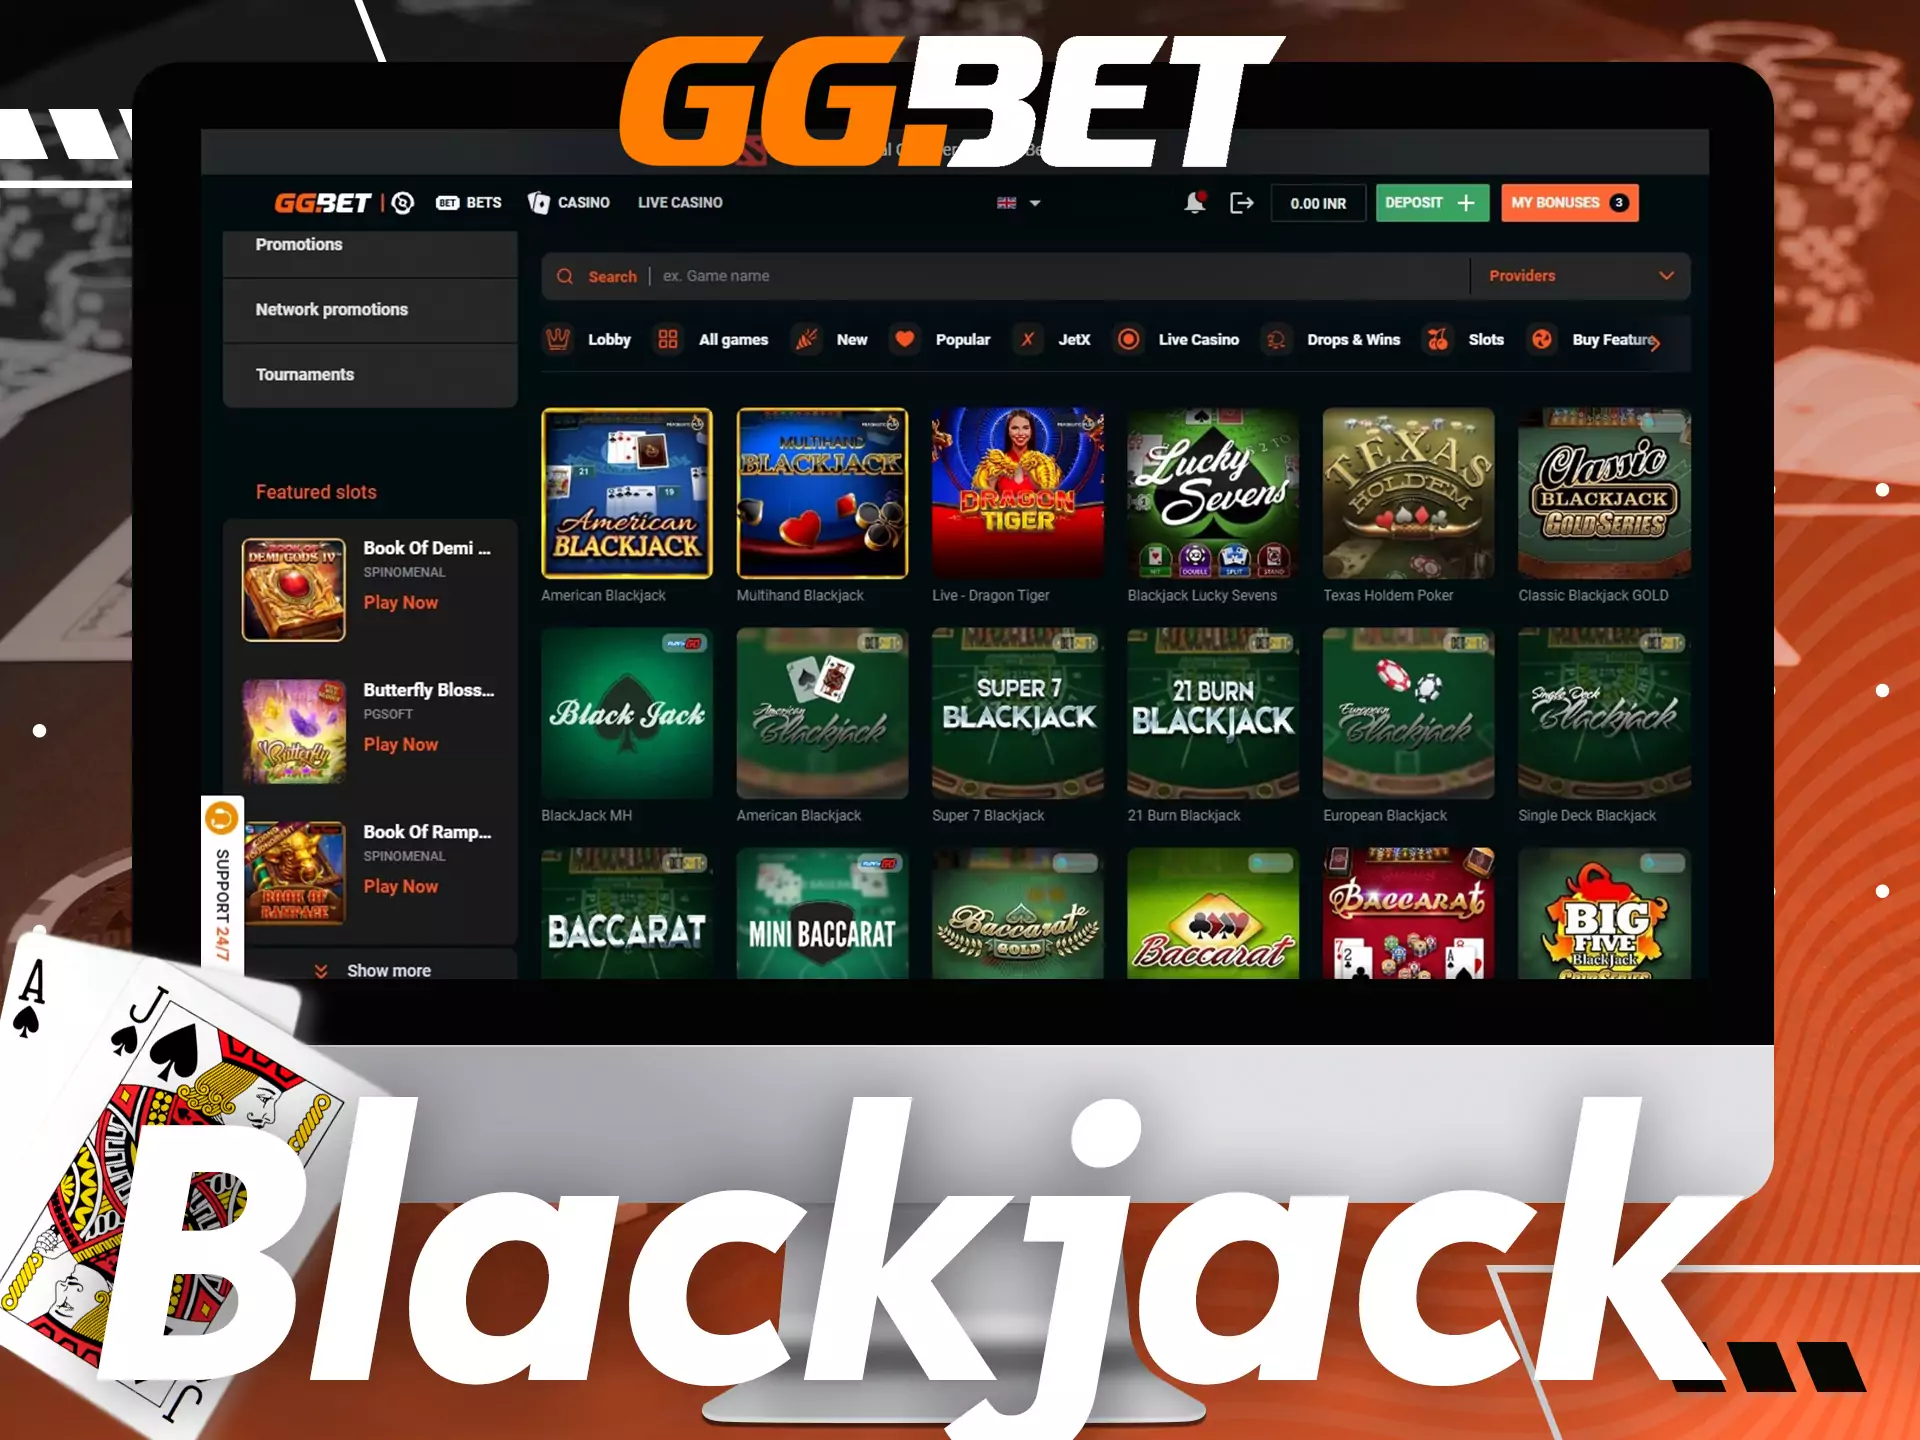 Blackjack is really popular among players of GGBet.